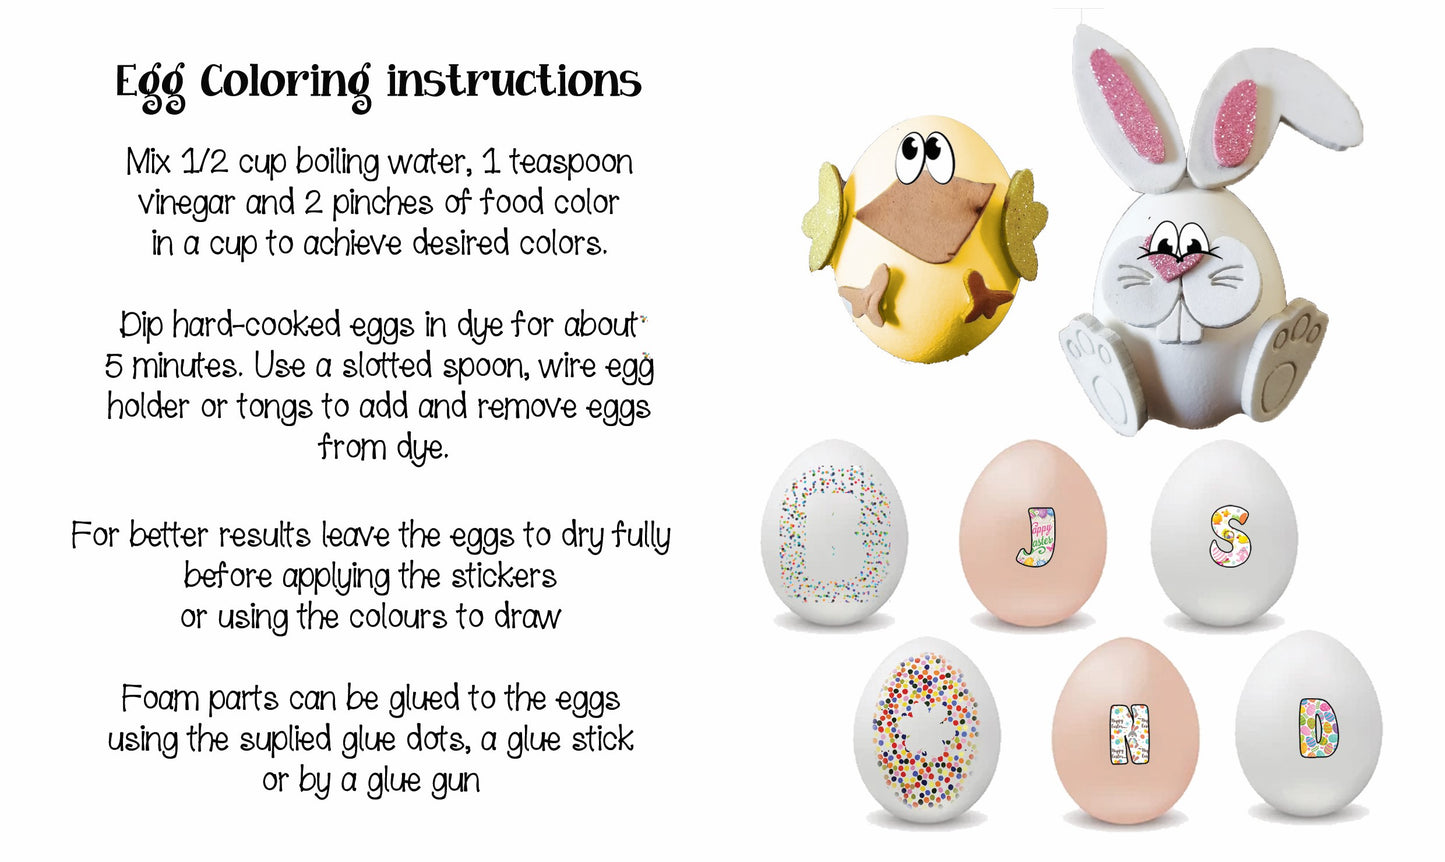 Egg colouring kit 7 (3D chick & bunny kit)